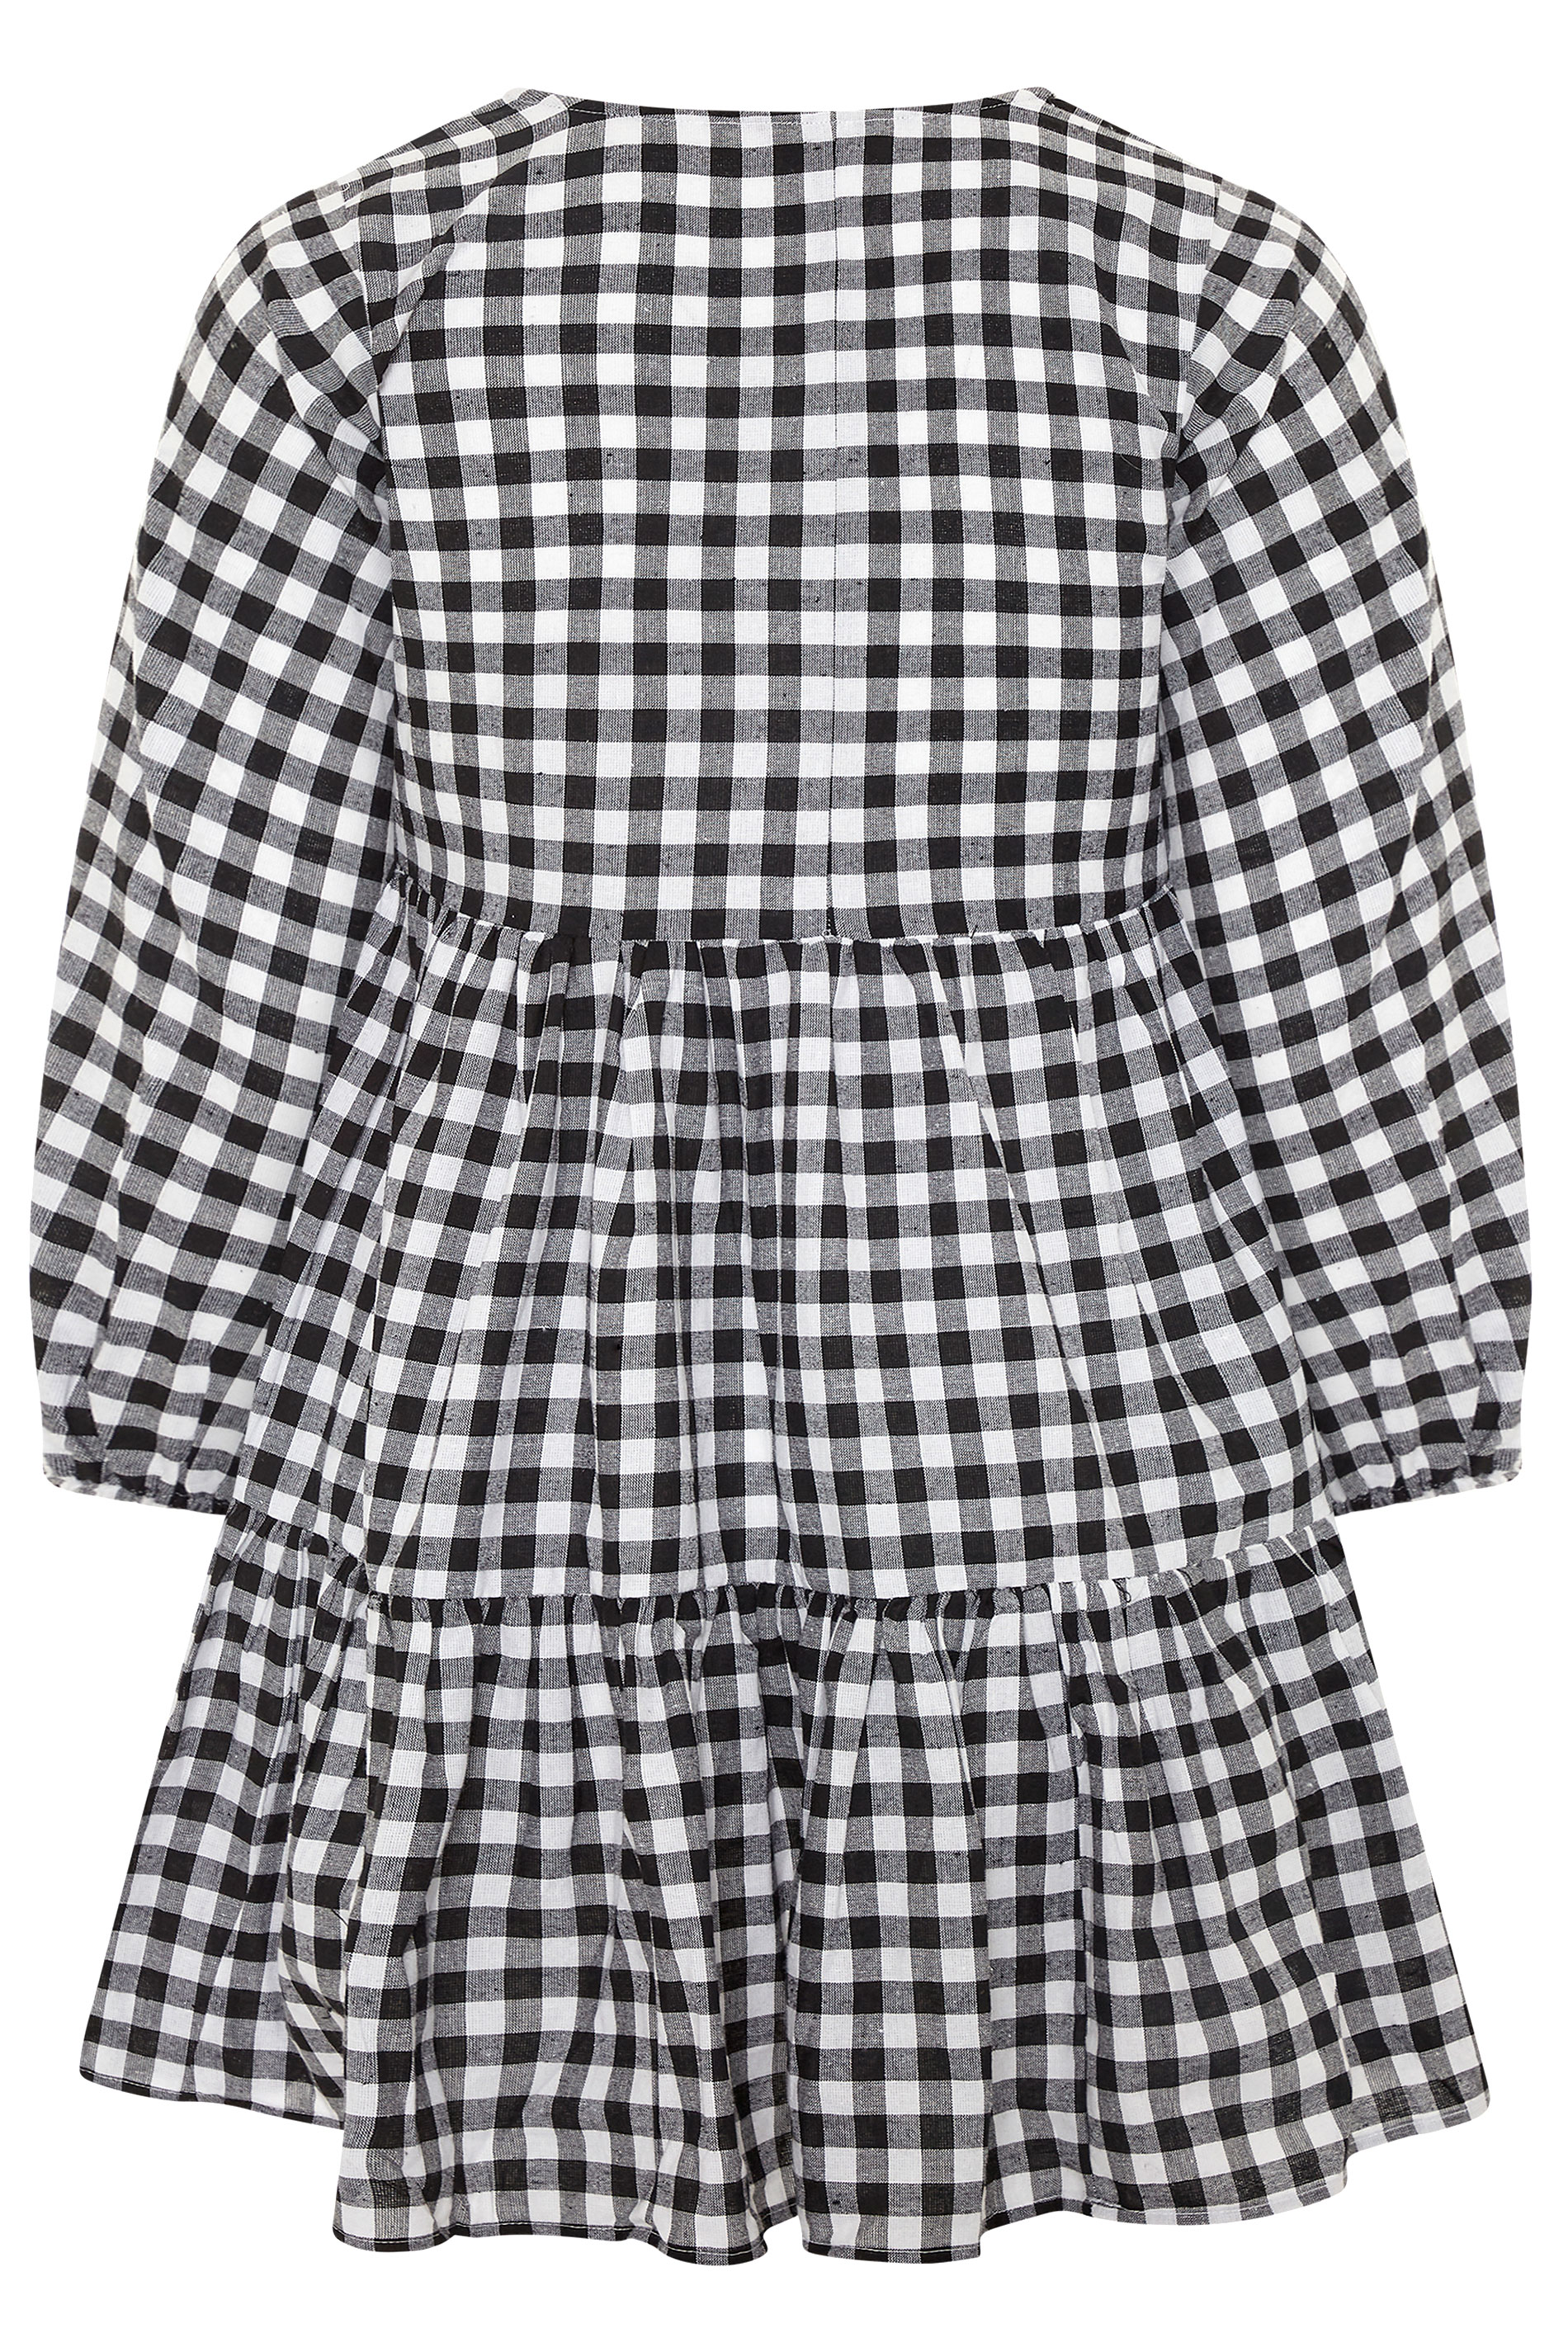 Black & White Gingham Peplum Smock Dress | Yours Clothing